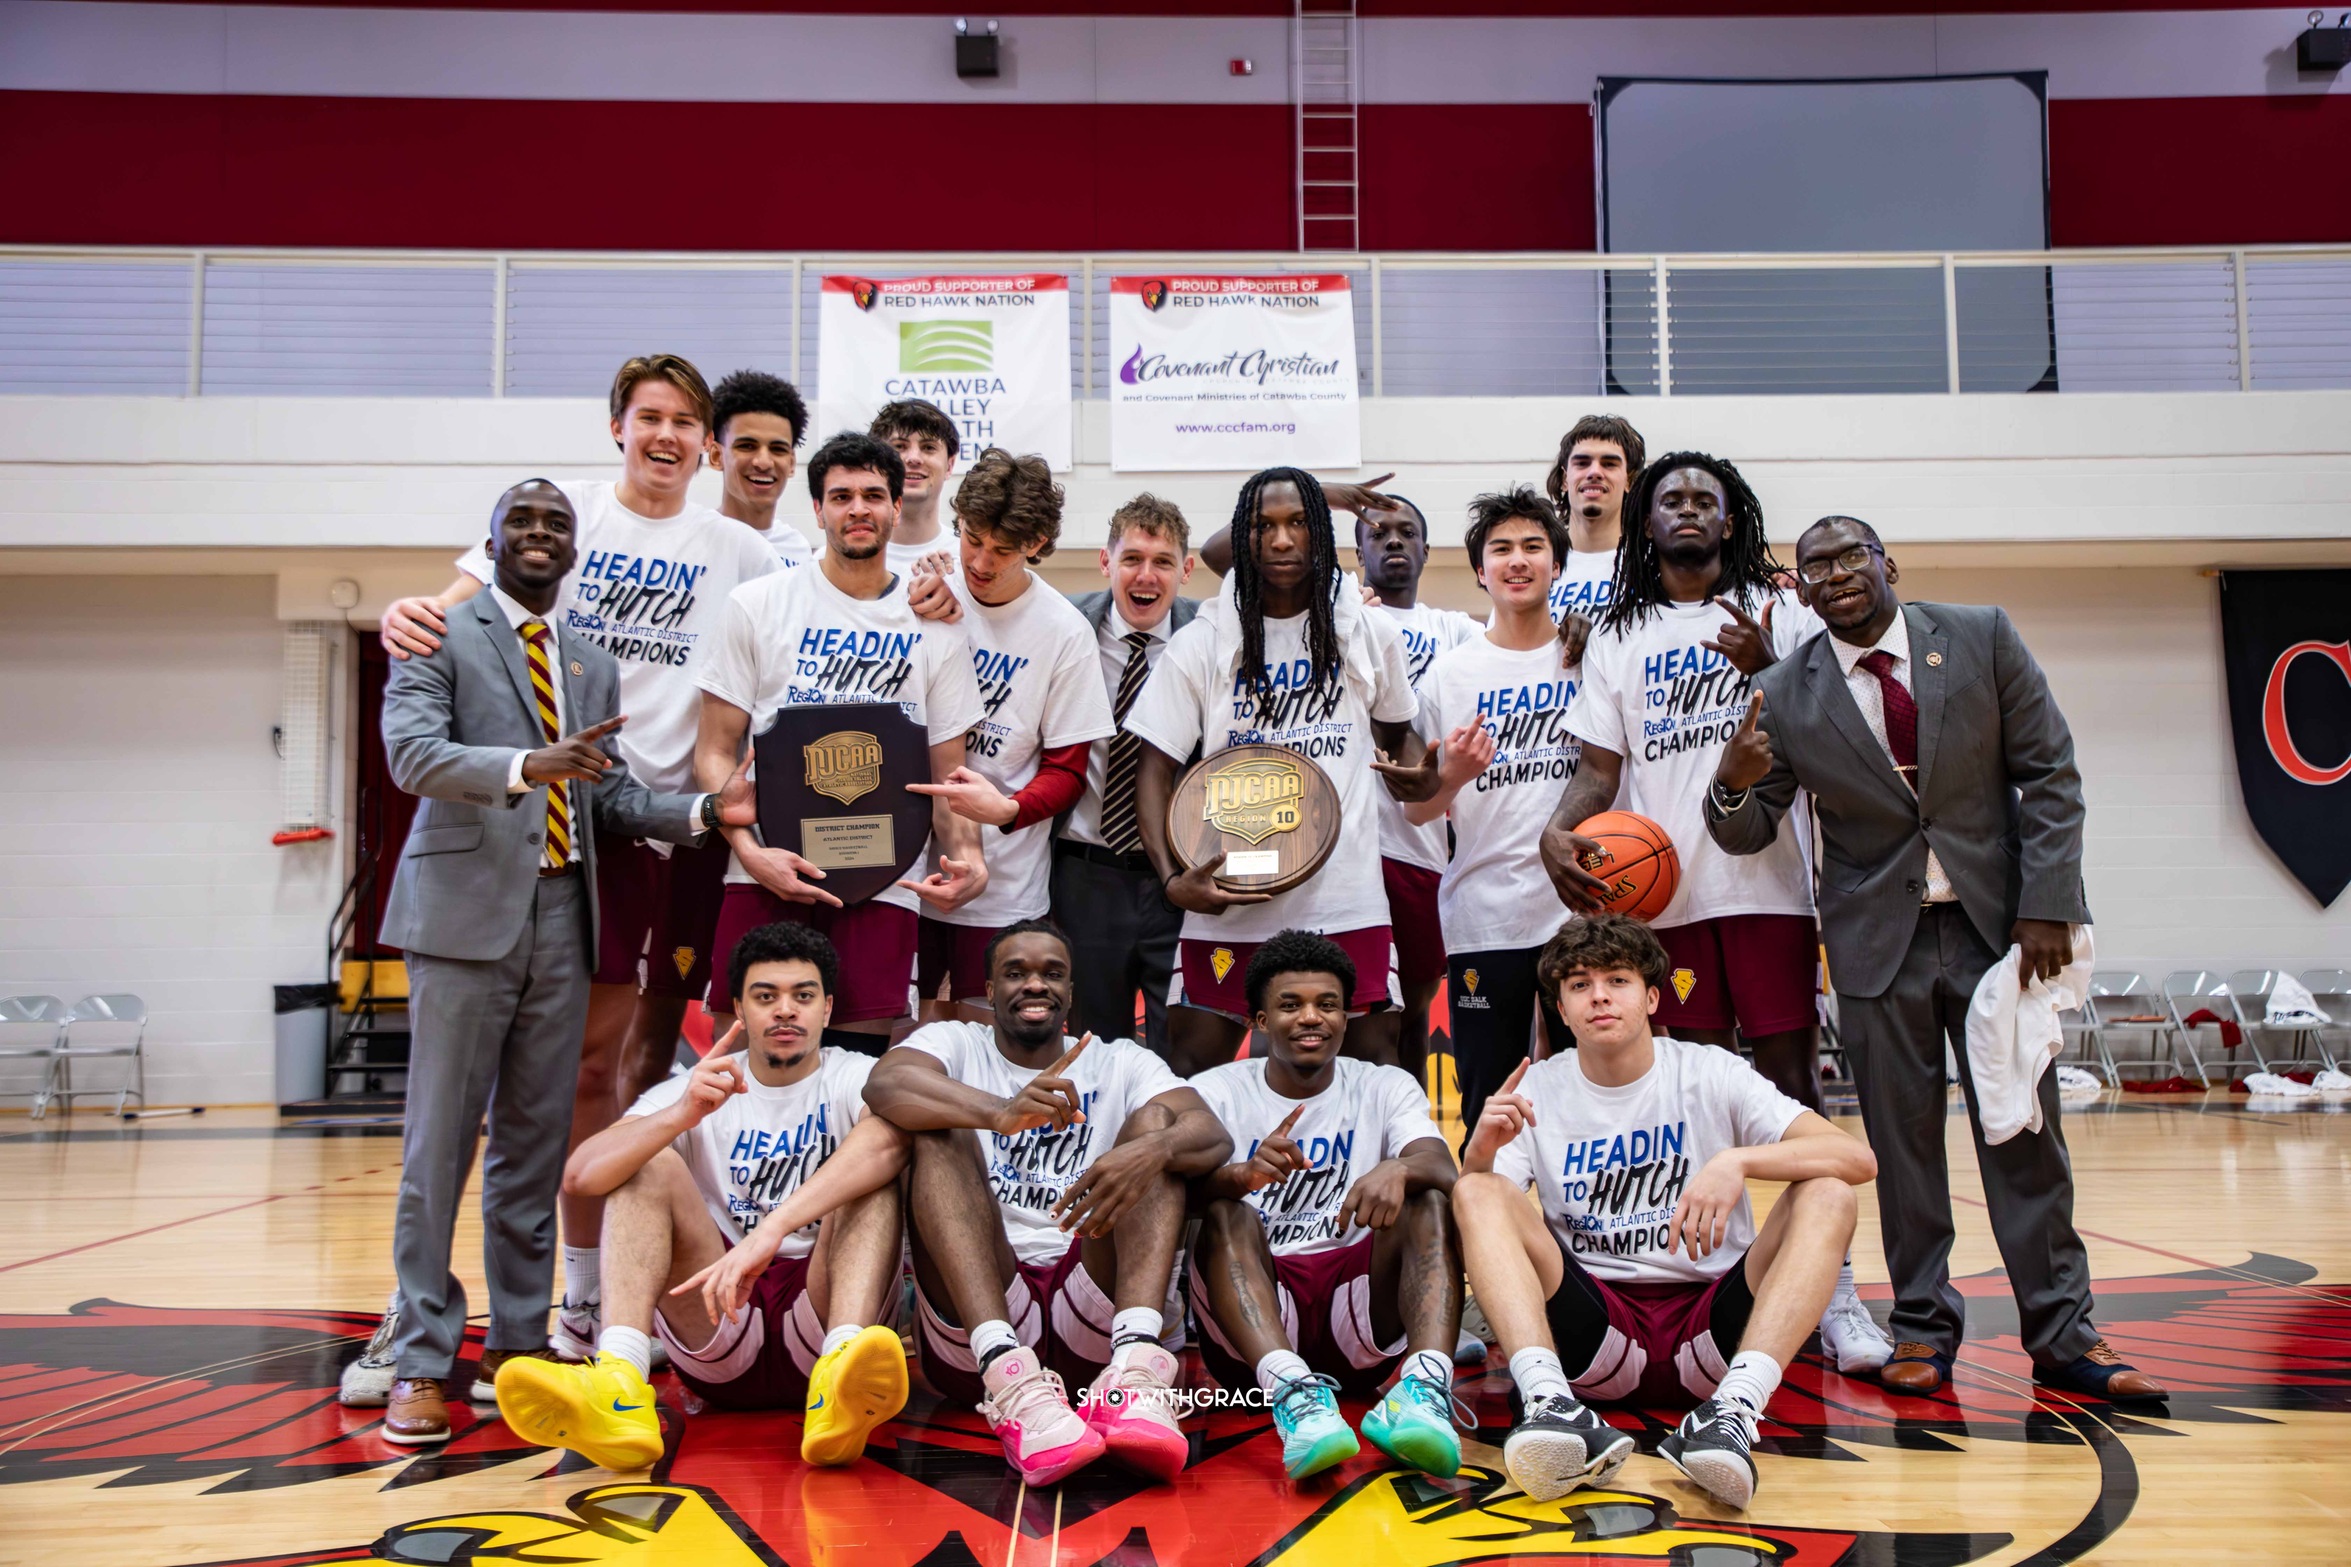 USC Salkehatchie wins the DI Men's Basketball Region/Atlantic District Championship